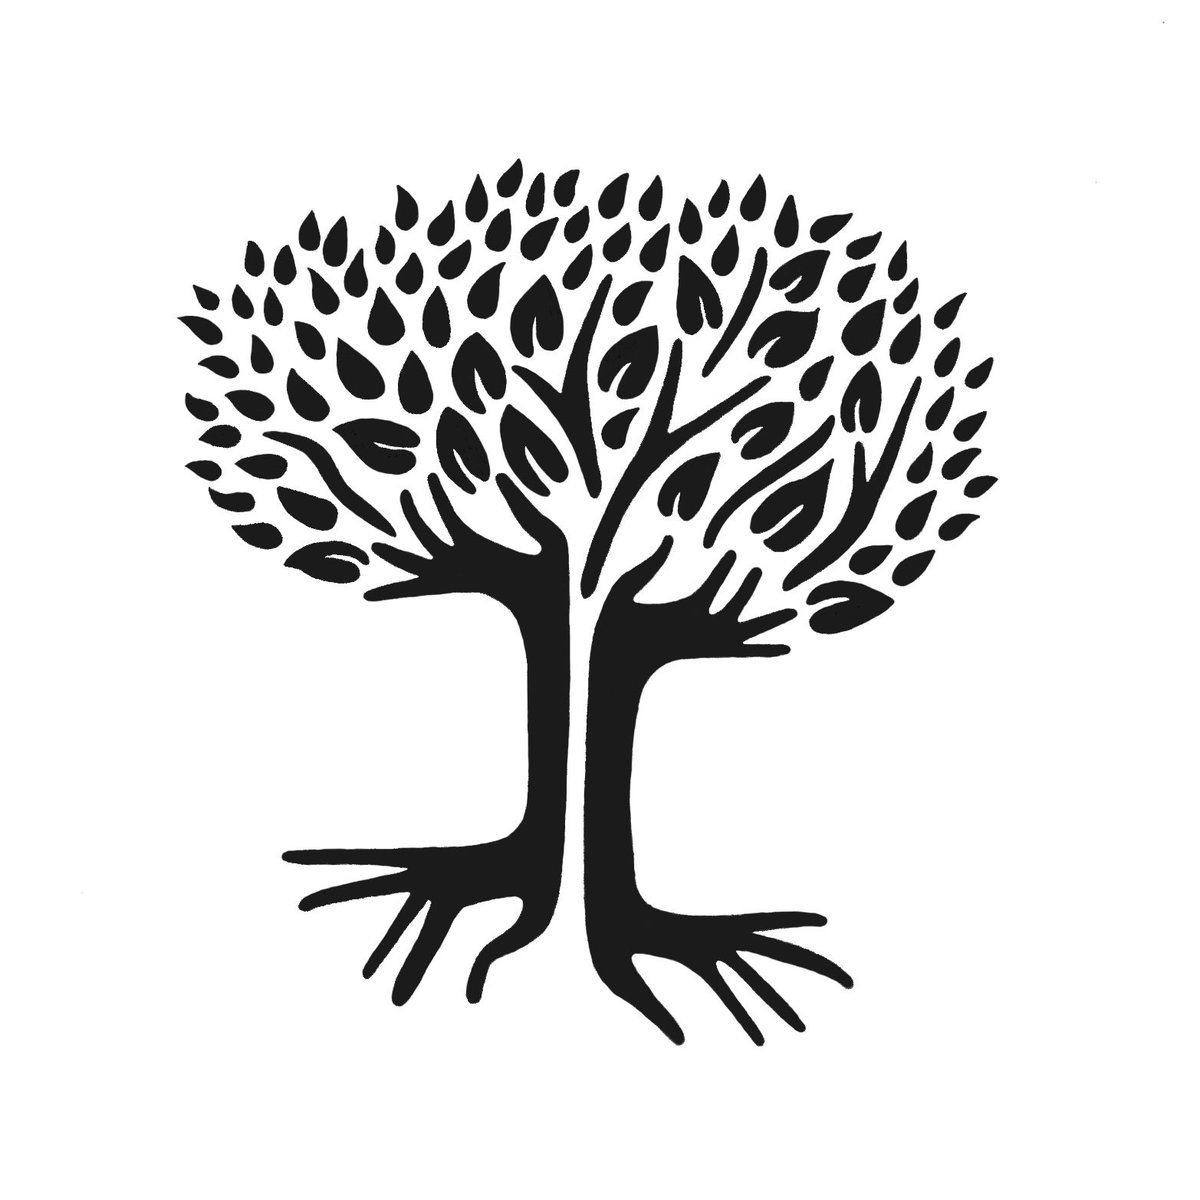 New logo design for the anti-mining group in Ecuador. #Logo #Design #Drawing #Tree #Artist #LogoDesigner #Logos #Art #Artist #BejatMcCrackenEnvironmentalArtStudios #BejatMcCracken